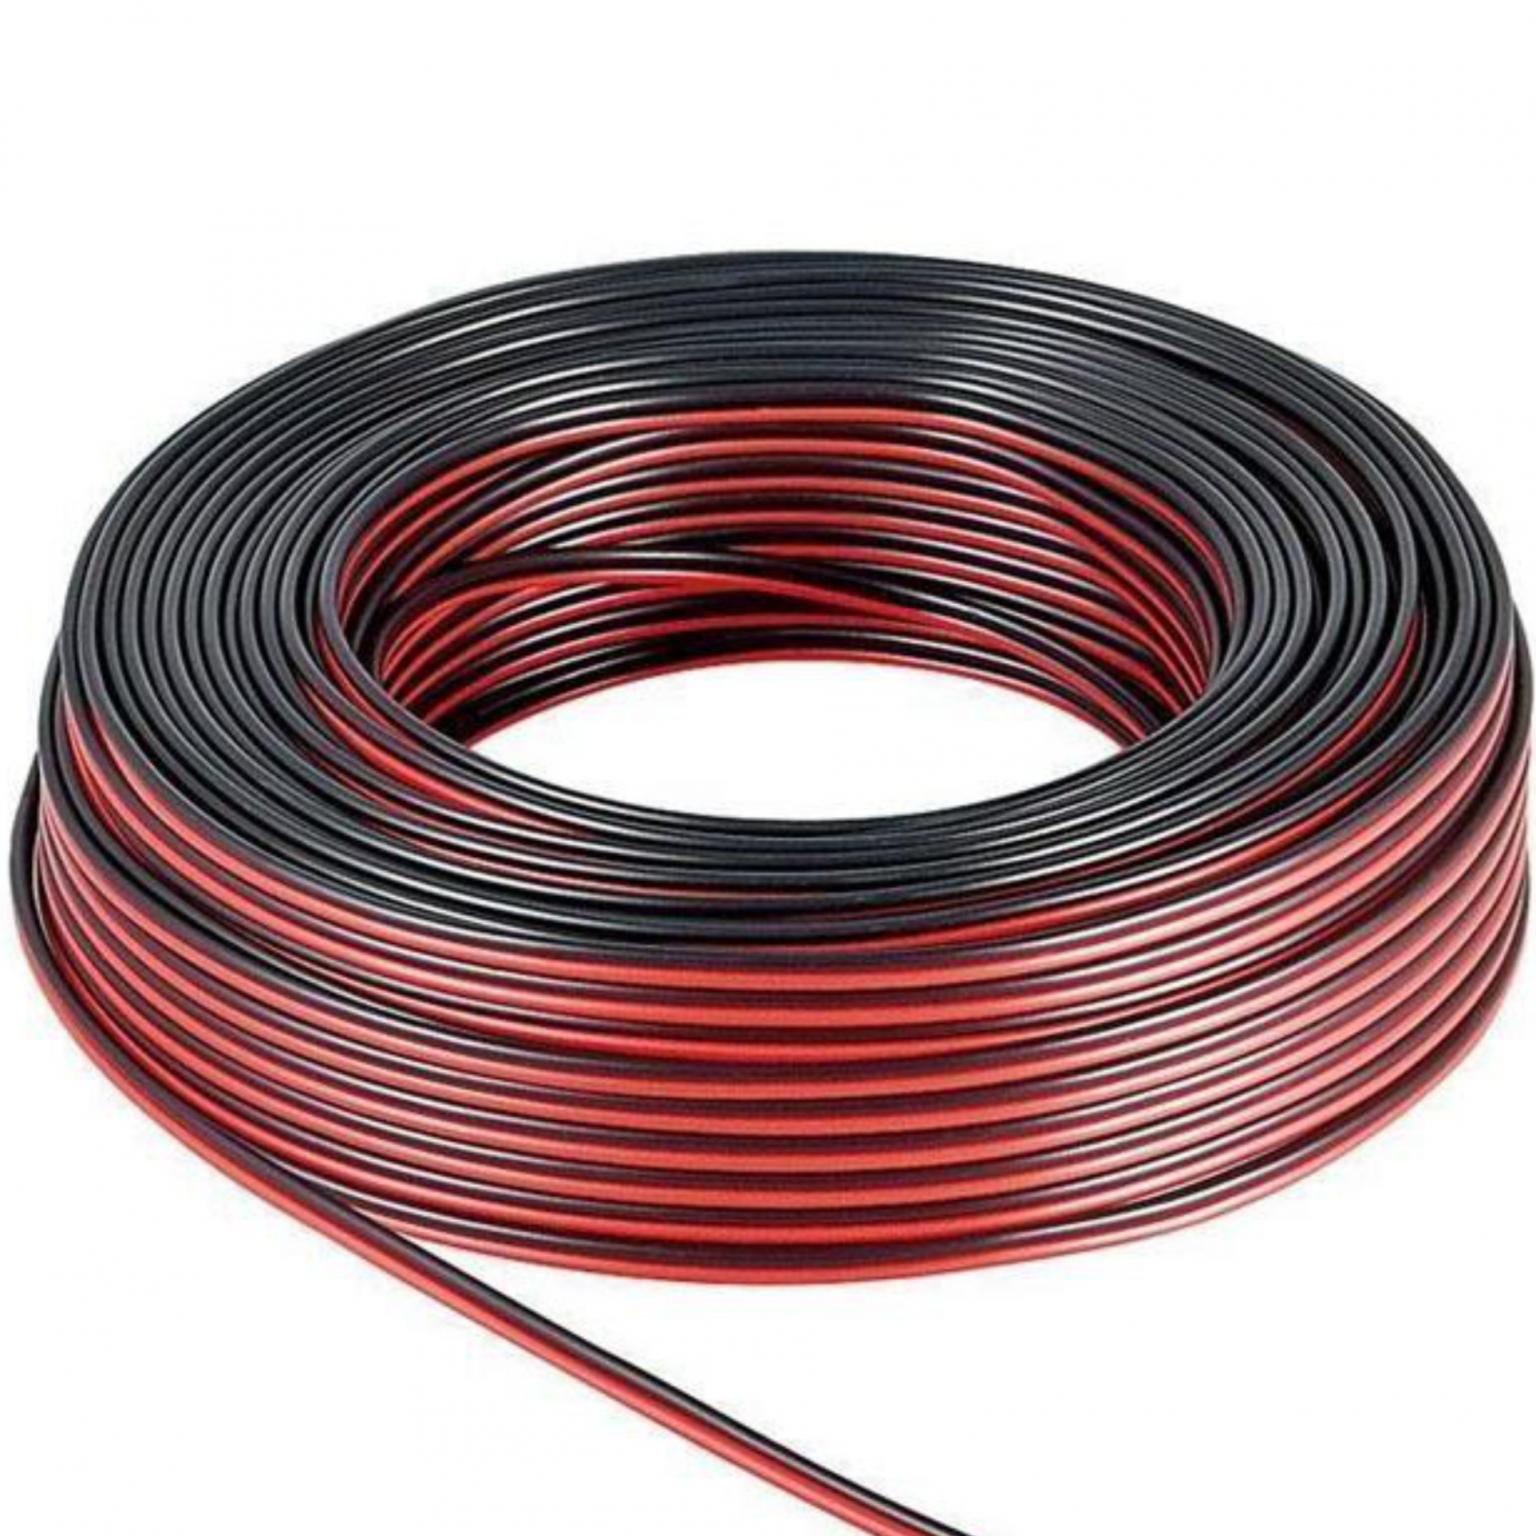 Image of Speaker cable red/black 100 m spool, cable diameter 2 x 2,5 mm? - Goob